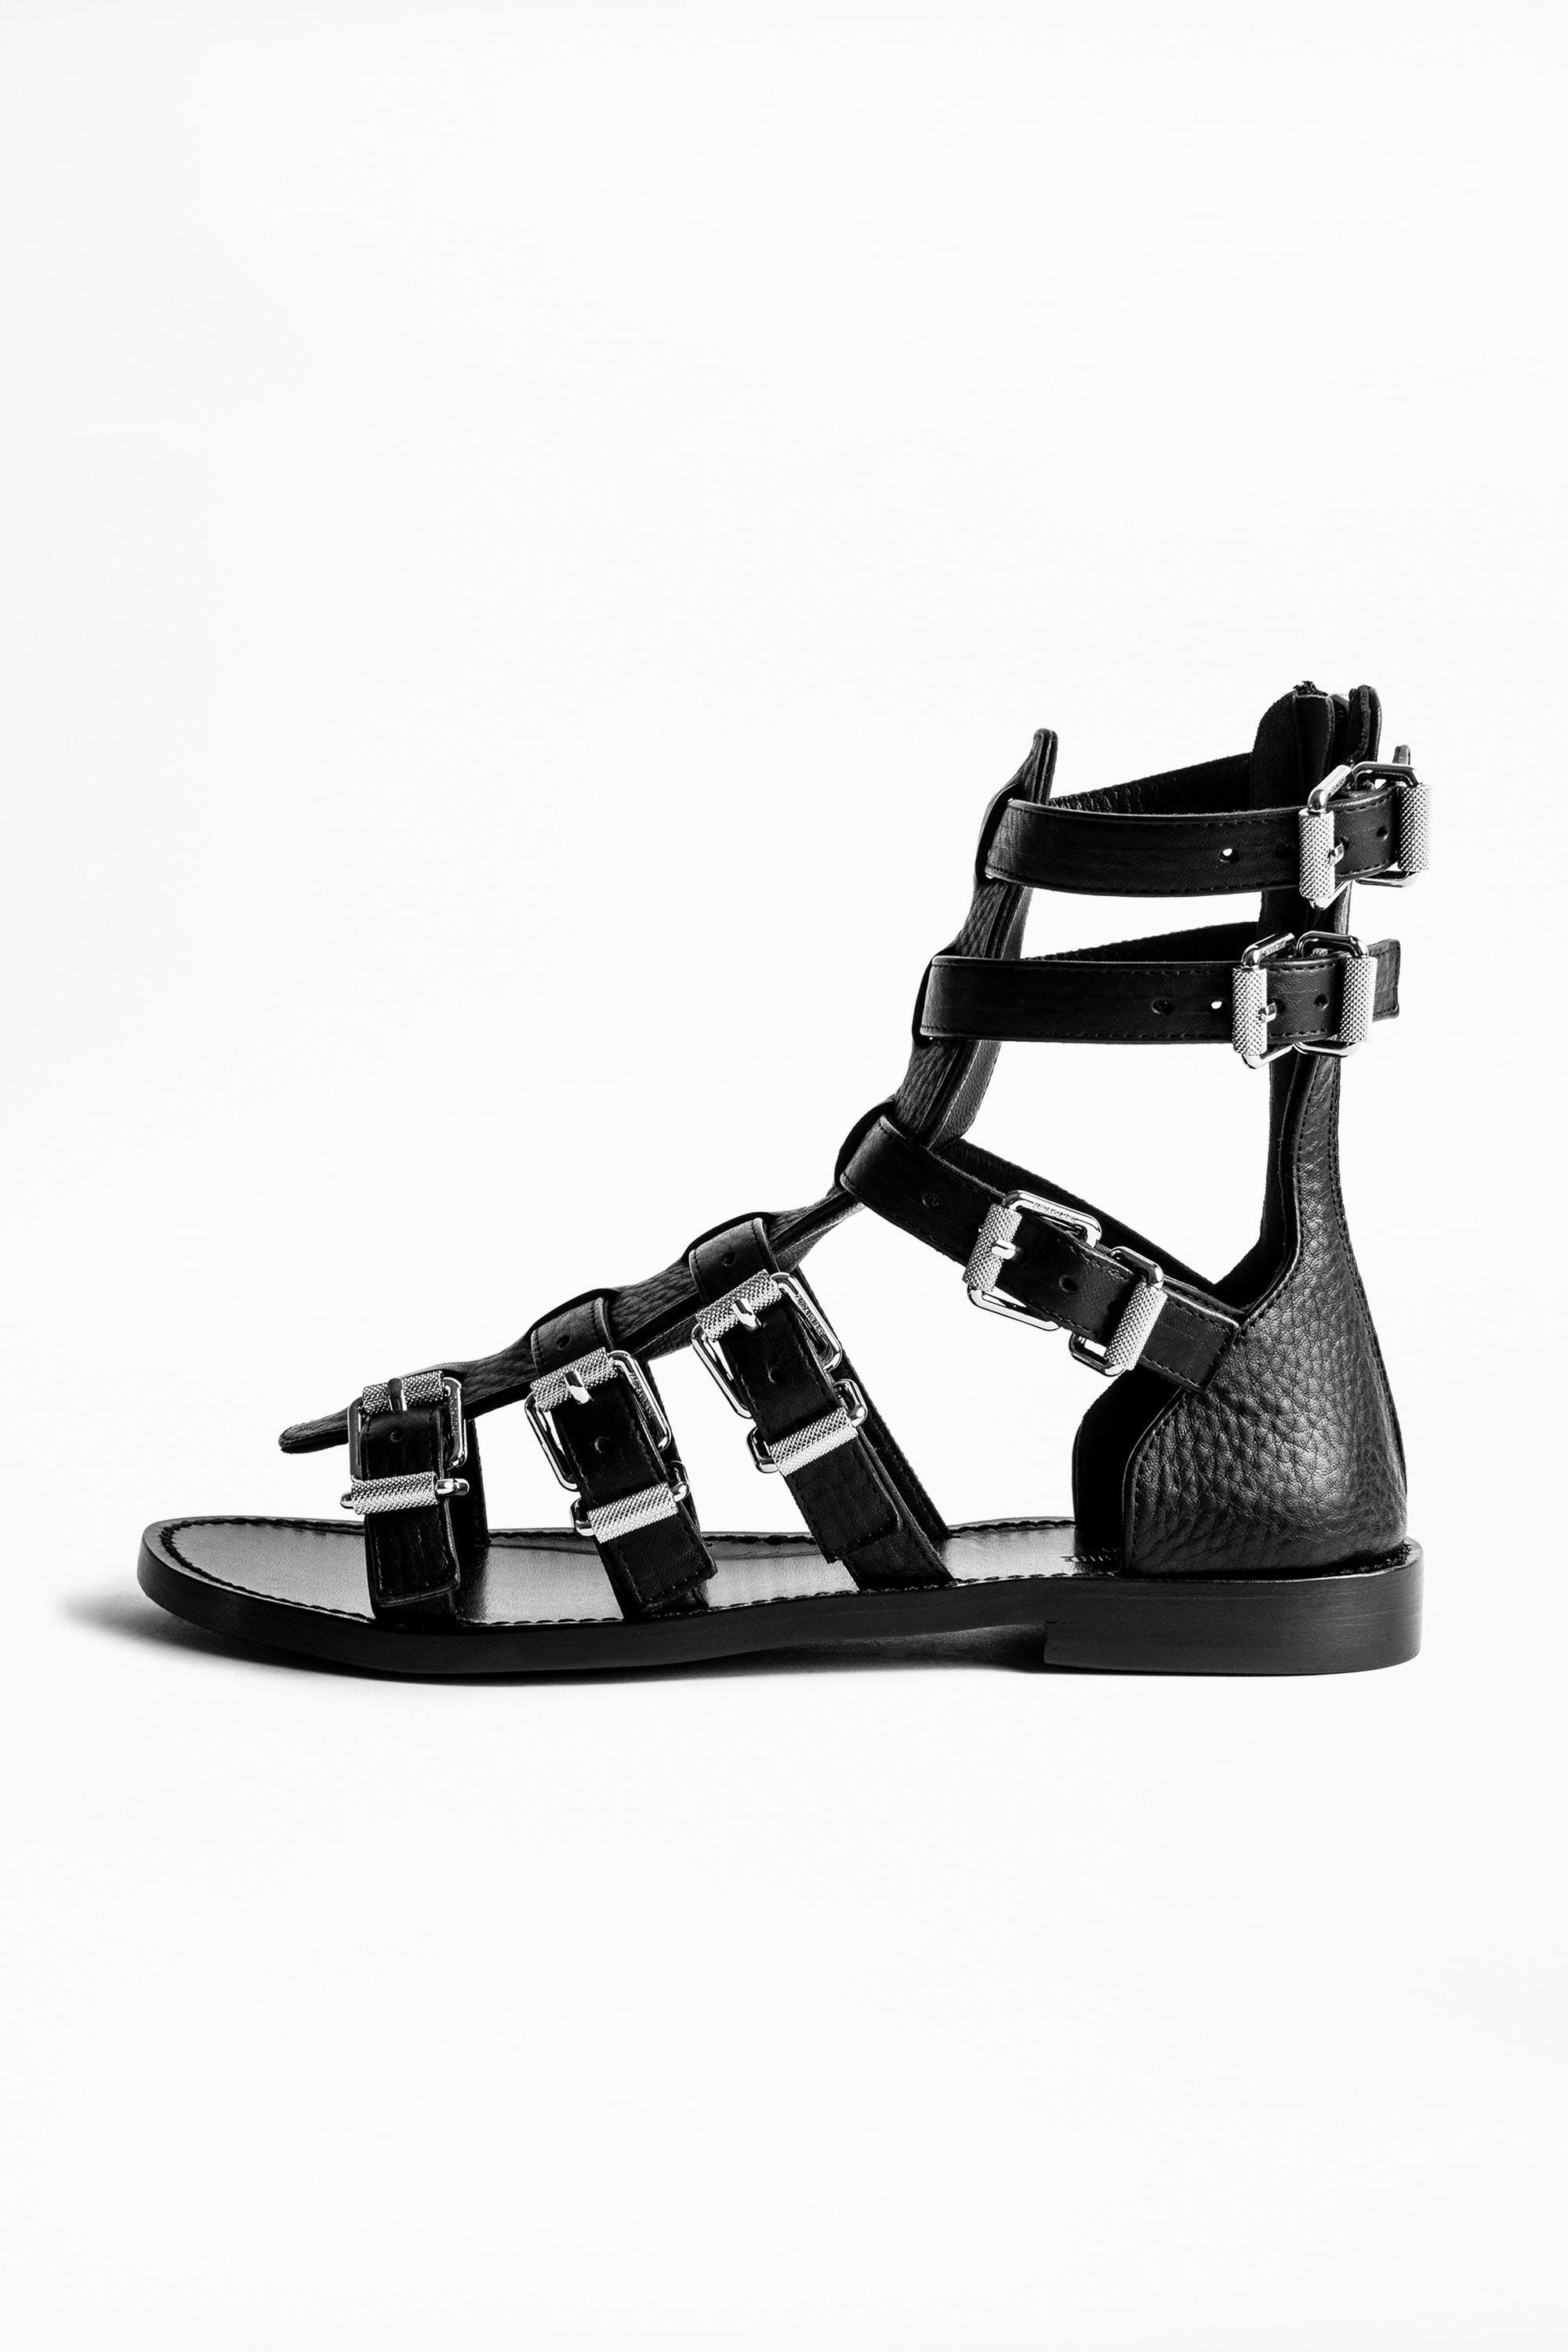 Zadig & Voltaire Leather Capri Sandals in Black - Save 30% - Lyst